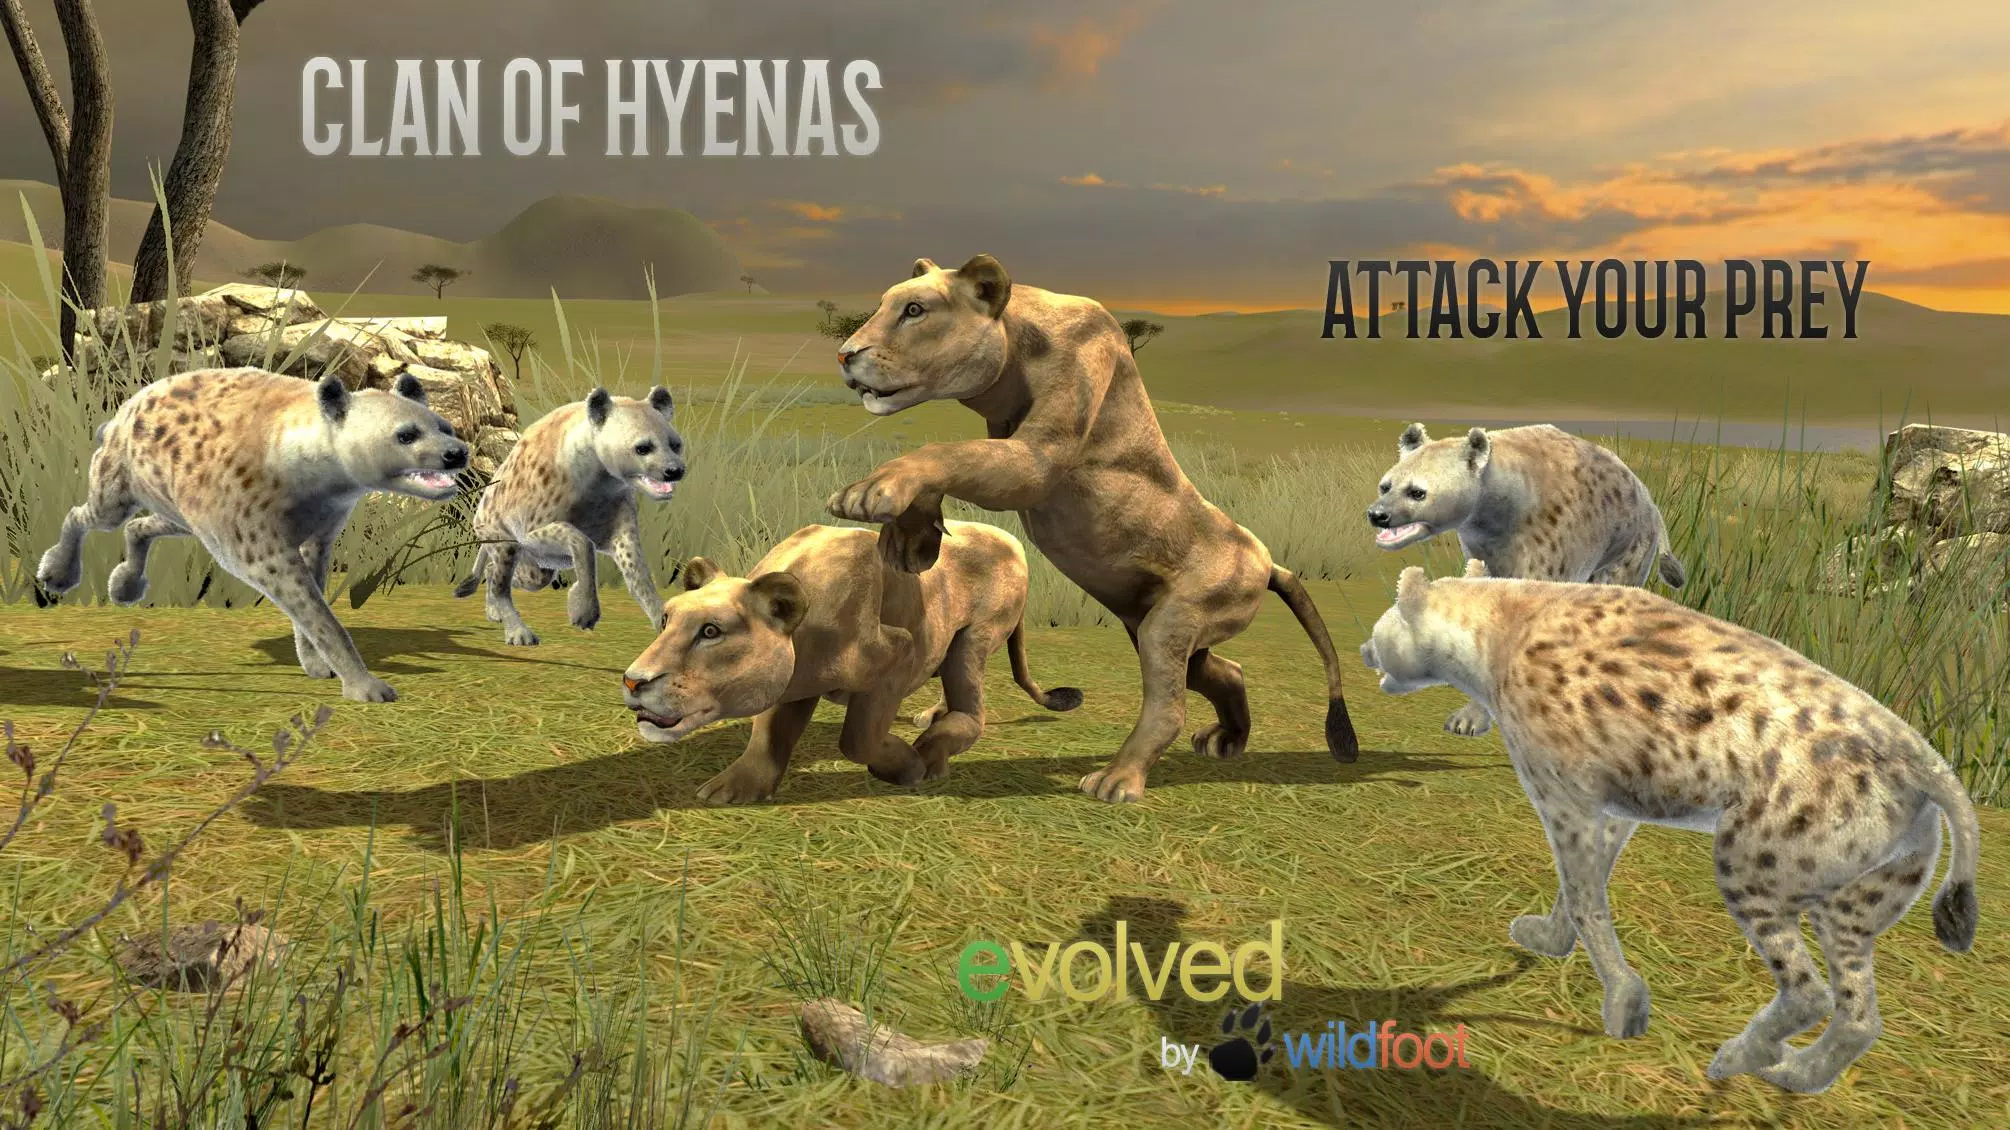 Hyenas Game APK